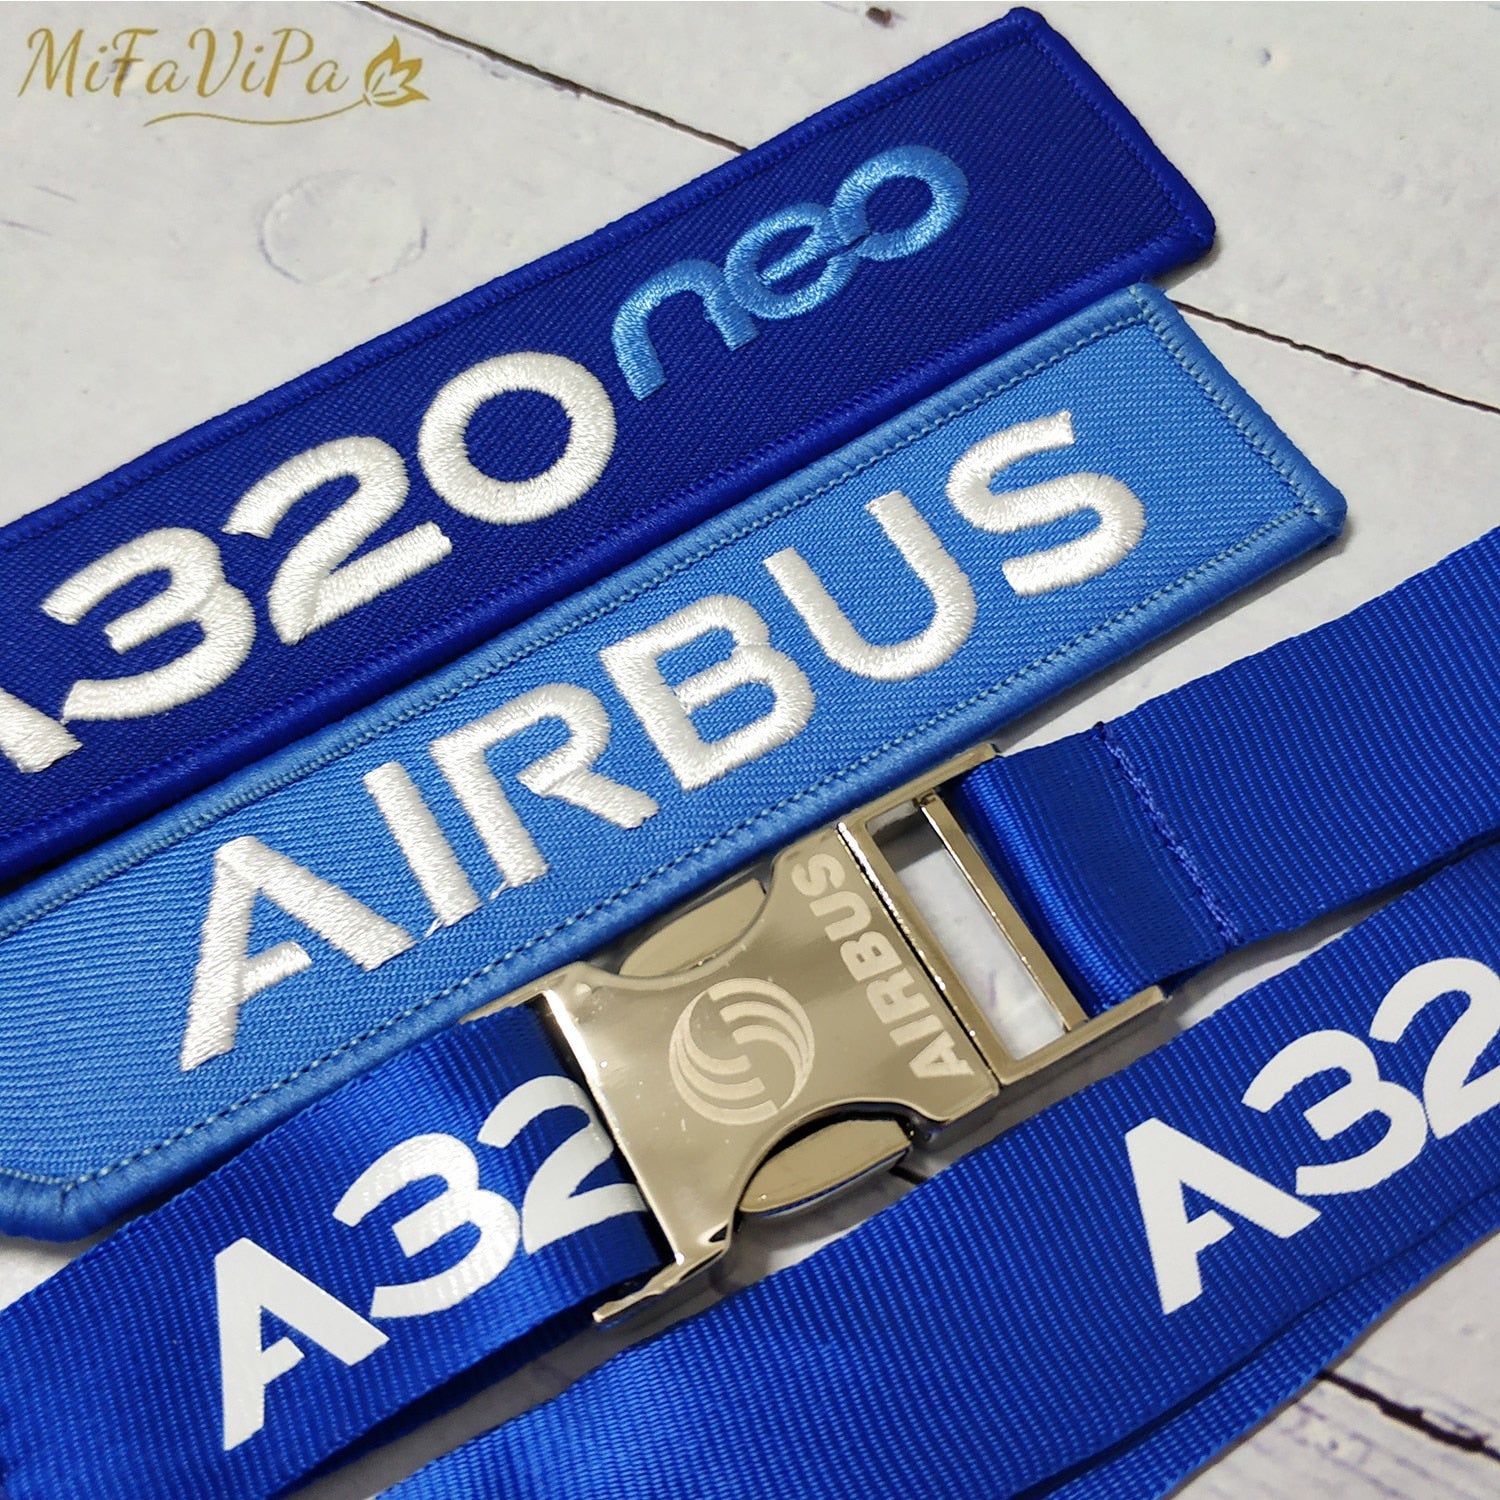 MiFaViPa 3 PCS Blue A320 Neo Lanyards Keychain Fashion Trinket Flight Crew Aviation Aircraft Gift Key Chain AIRBUS Sleutelhanger